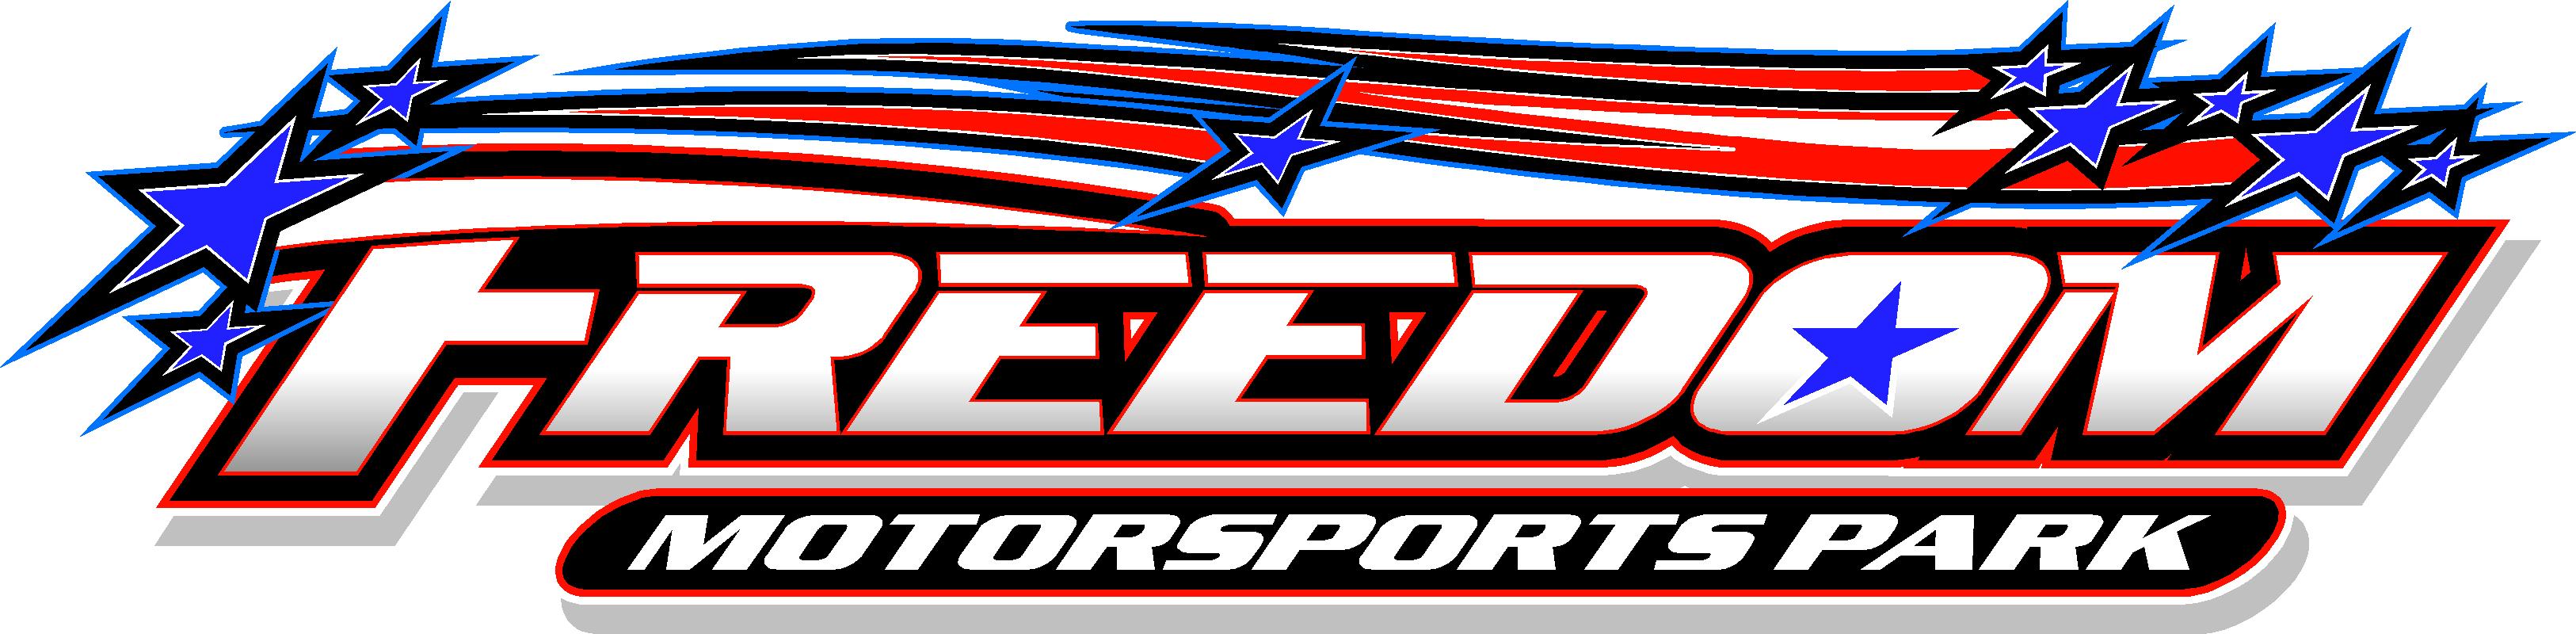 Ракер парк лого. American Racing logo. British American Racing Team logo. Mike pero Motorsport Park logo. American race